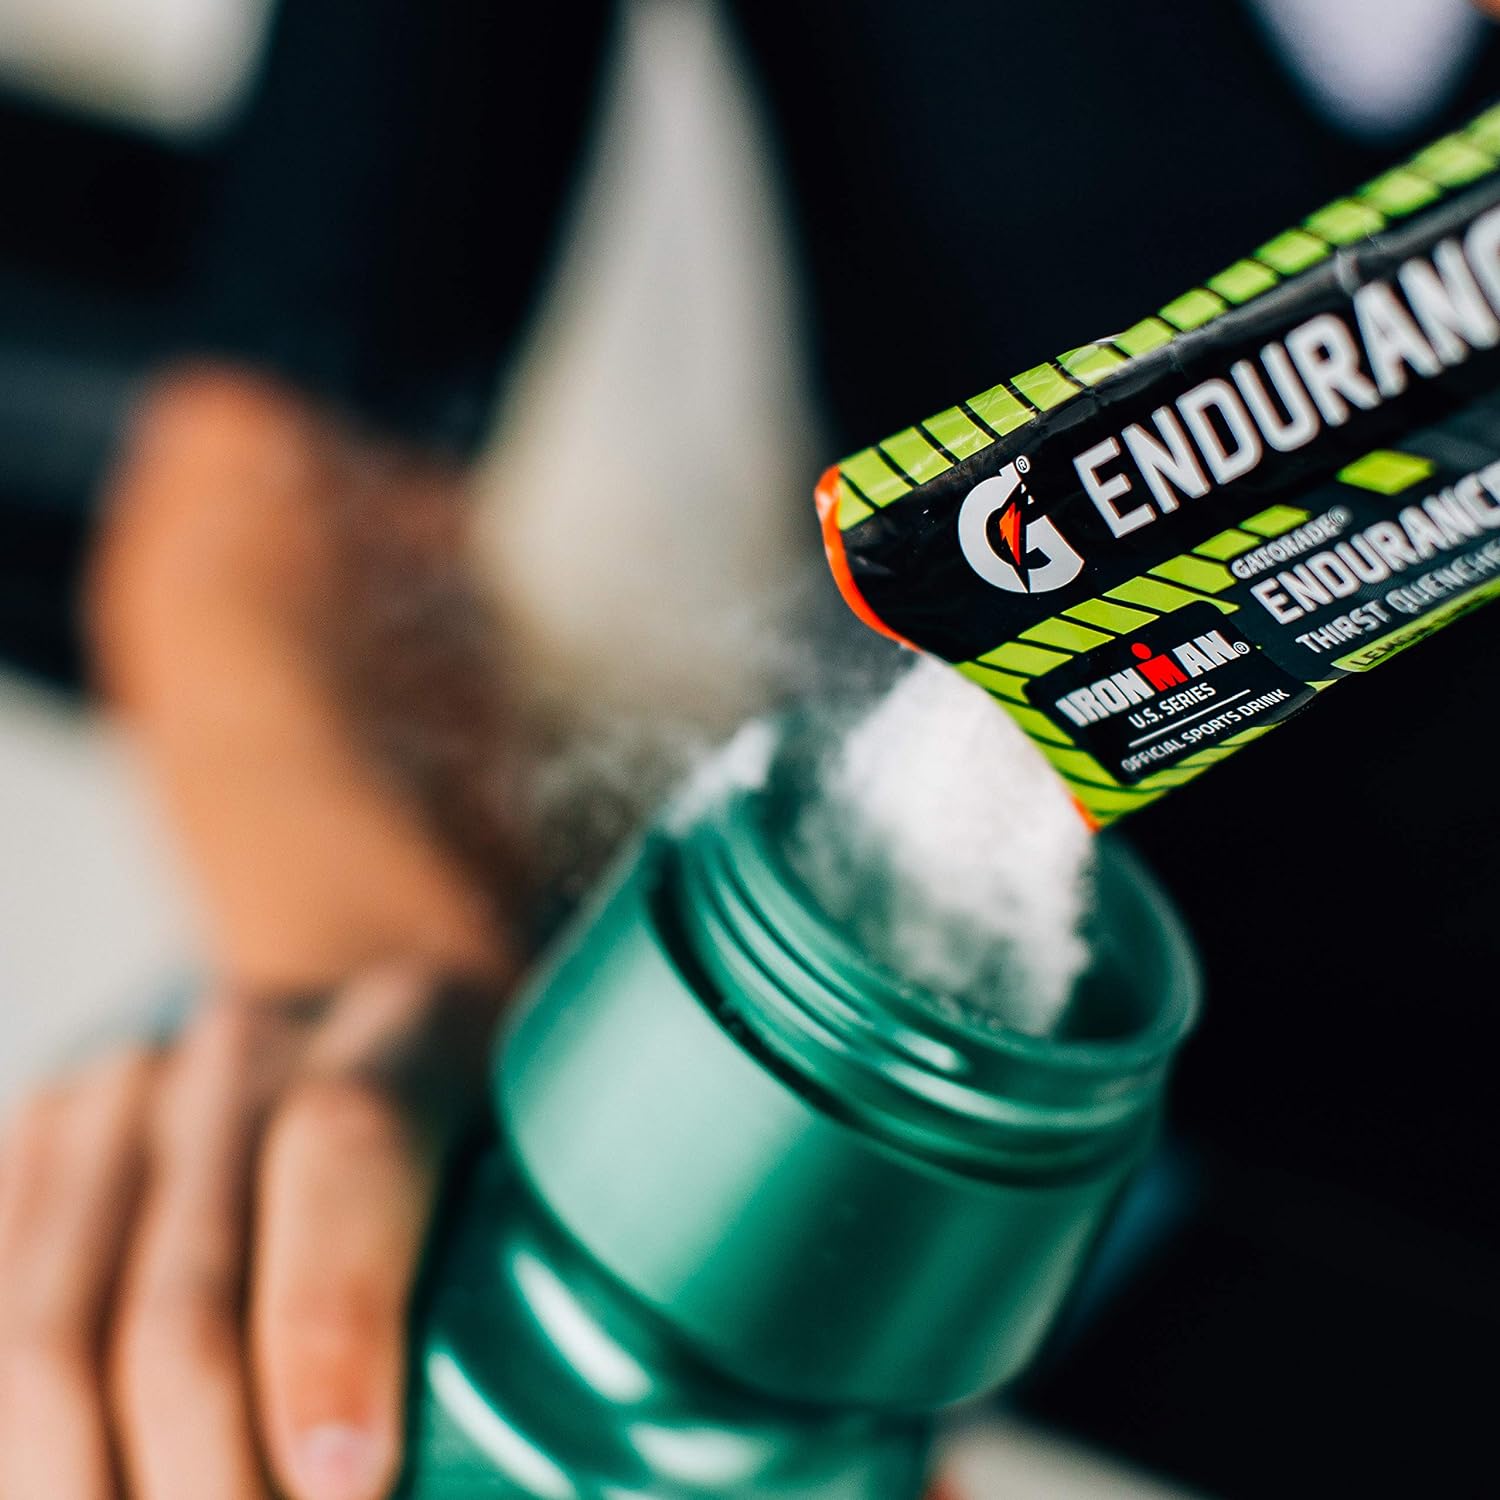 Gatorade Endurance Formula Powder Sticks, Lemon Lime, 1.72 oz. Packs, 12 Count : Health & Household